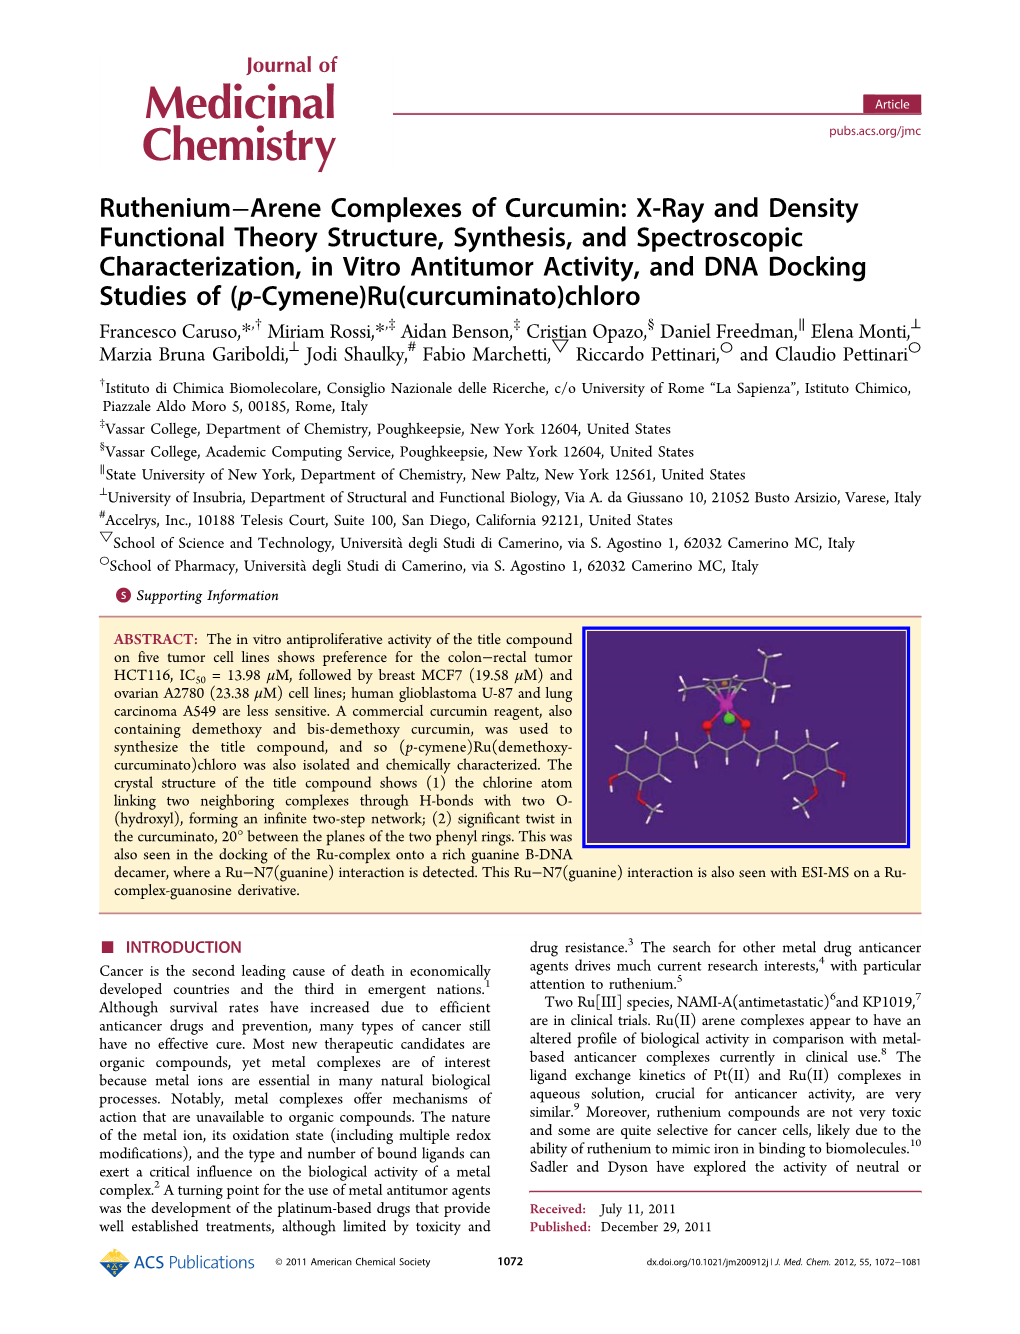 Rutheniumarene Complexes of Curcumin